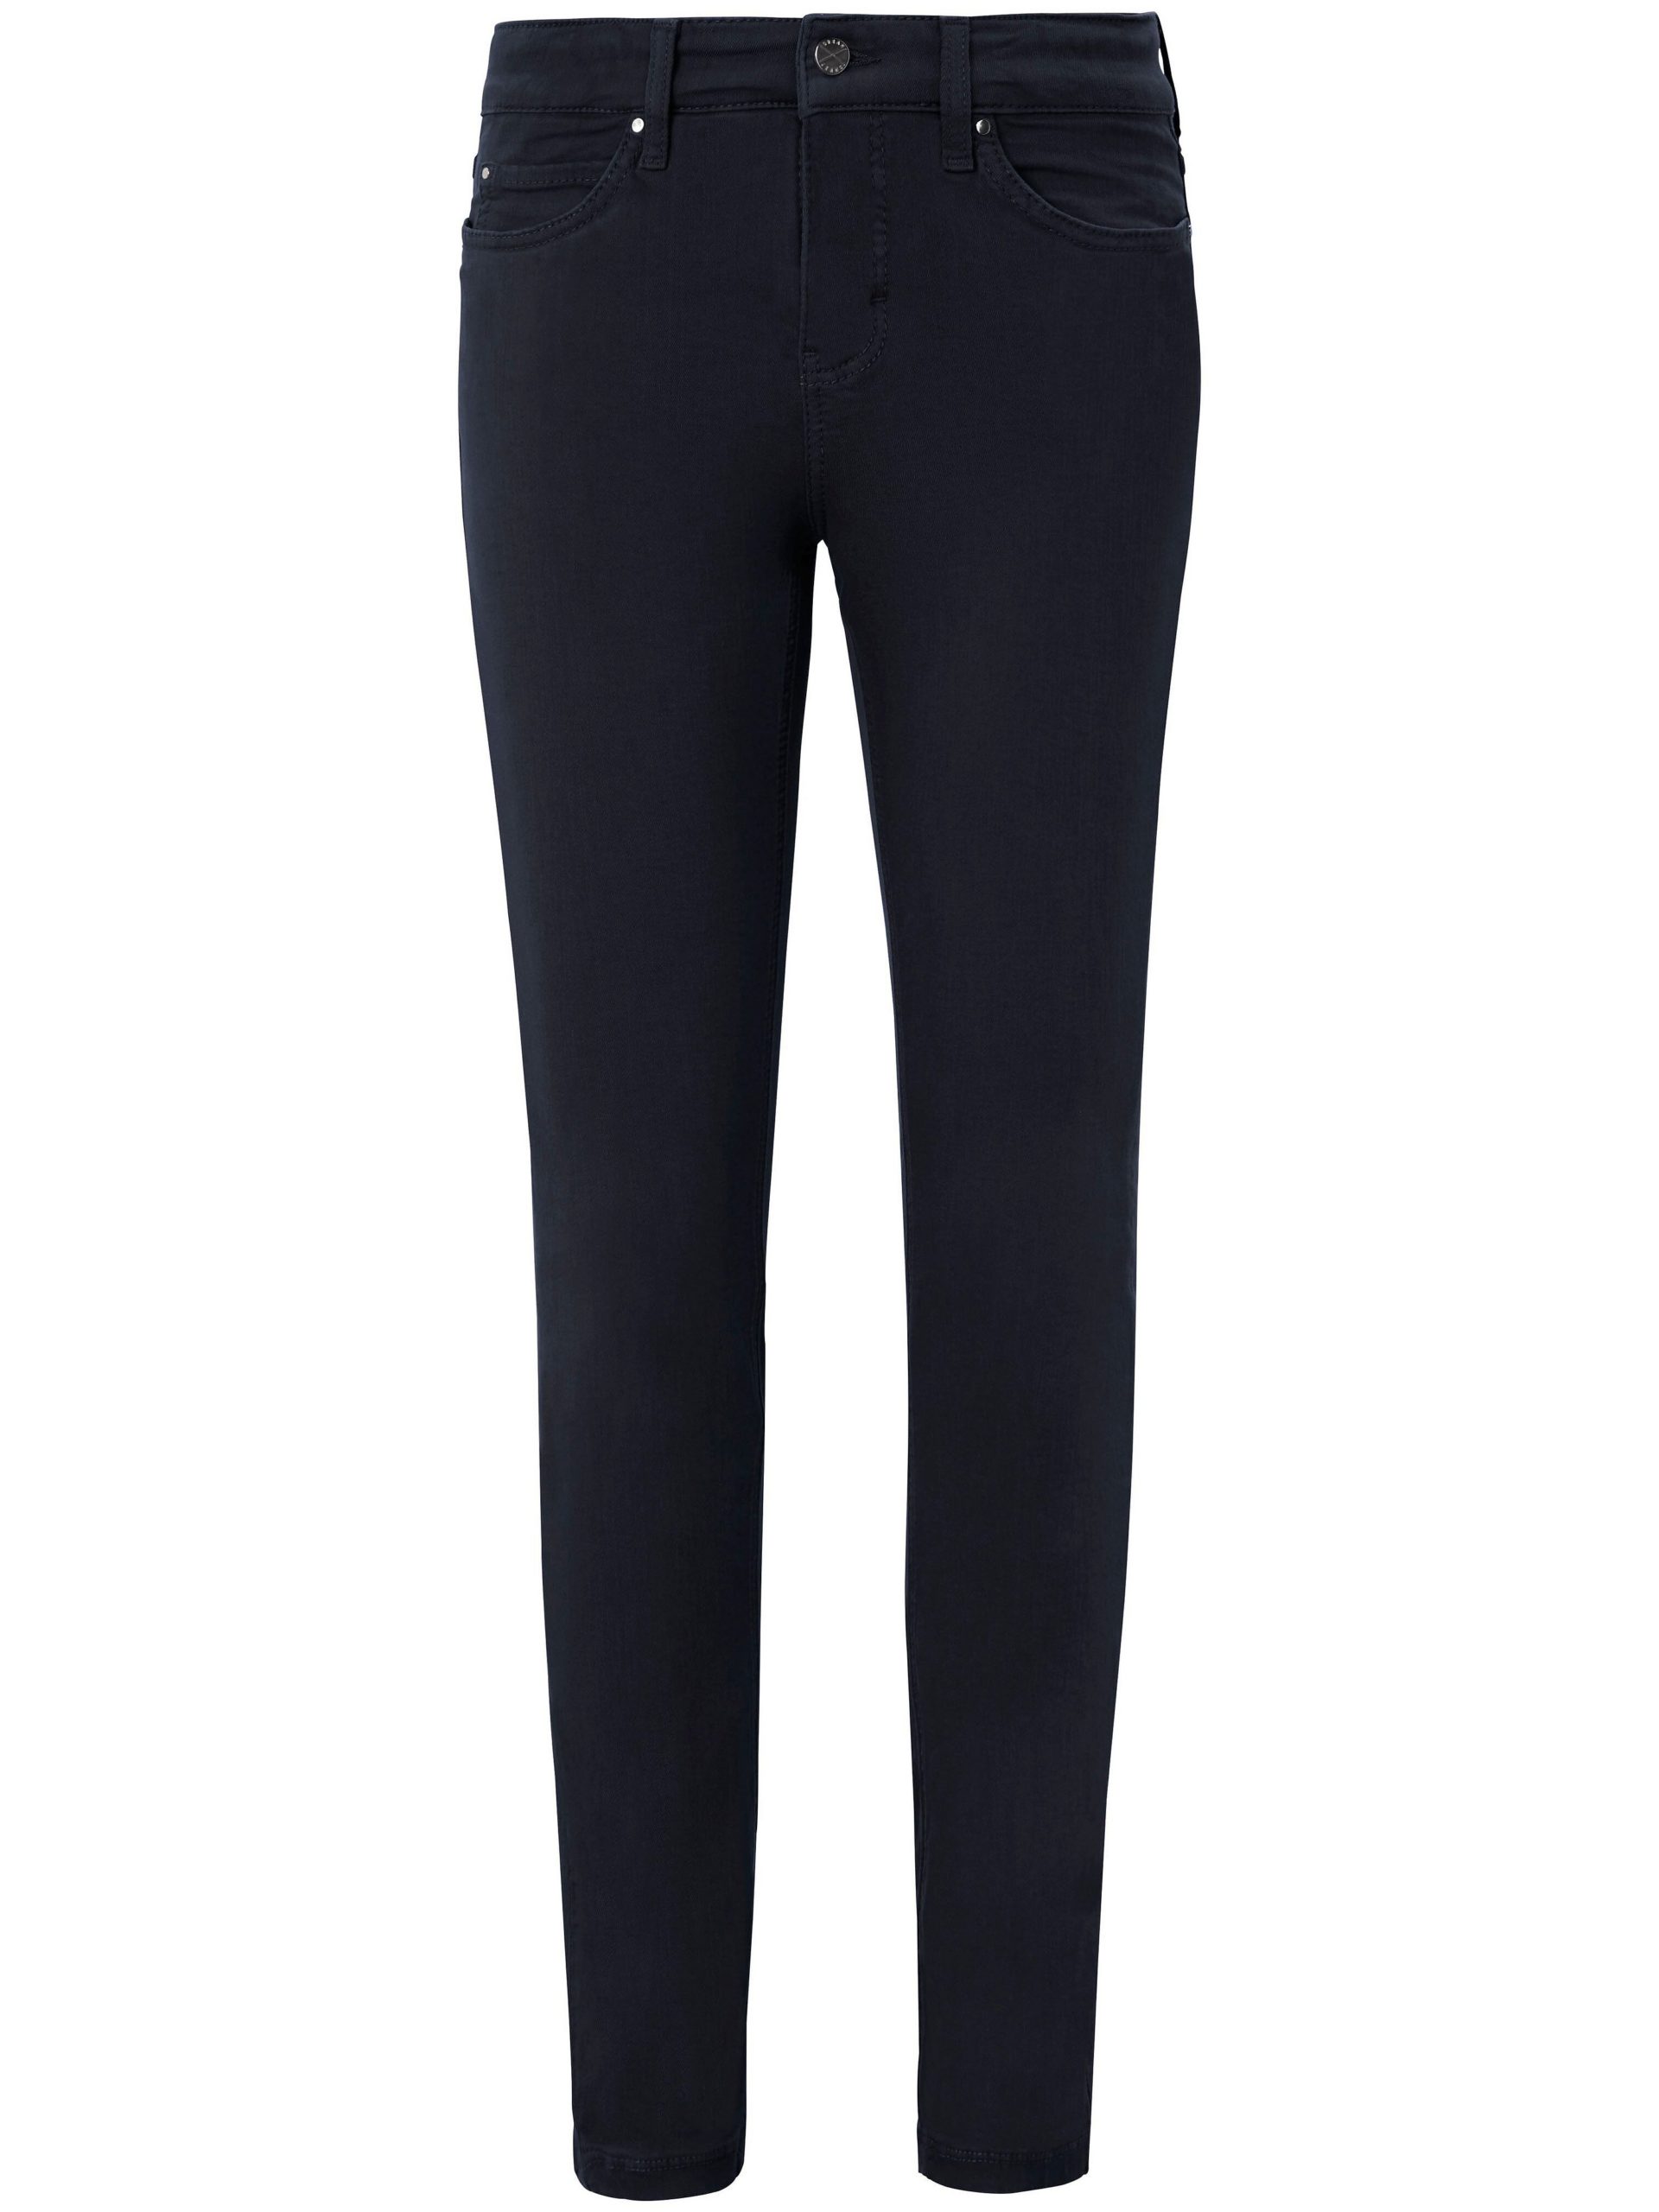 Jeans, model Dream Skinny, lengte 28 inch Van Mac blauw Kopen